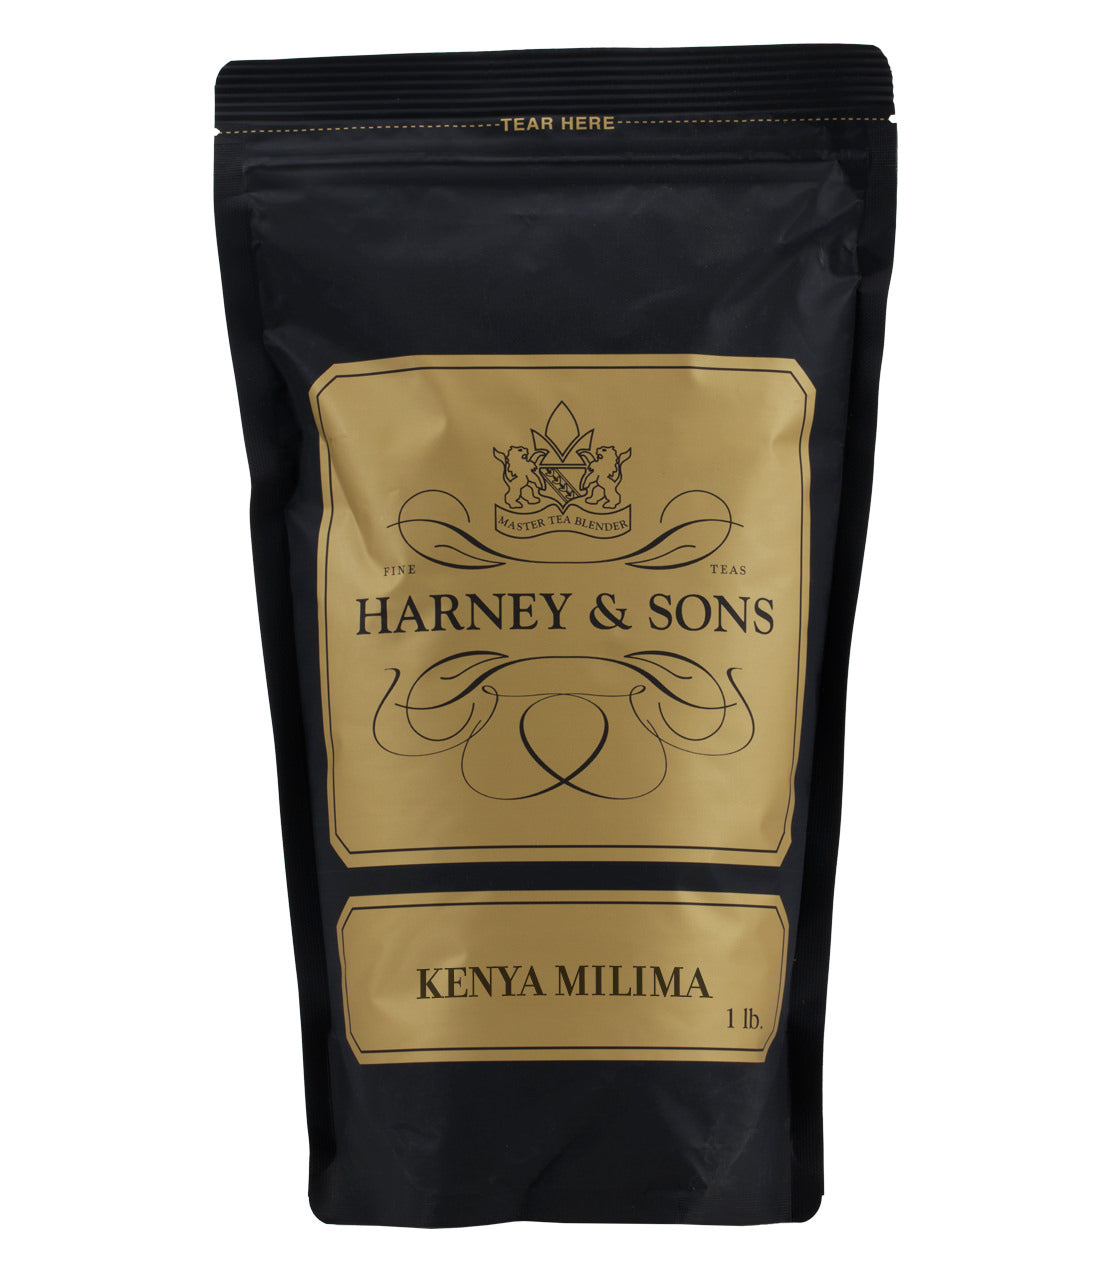 Kenya Milima - Loose 1 lb. Bag - Harney & Sons Fine Teas